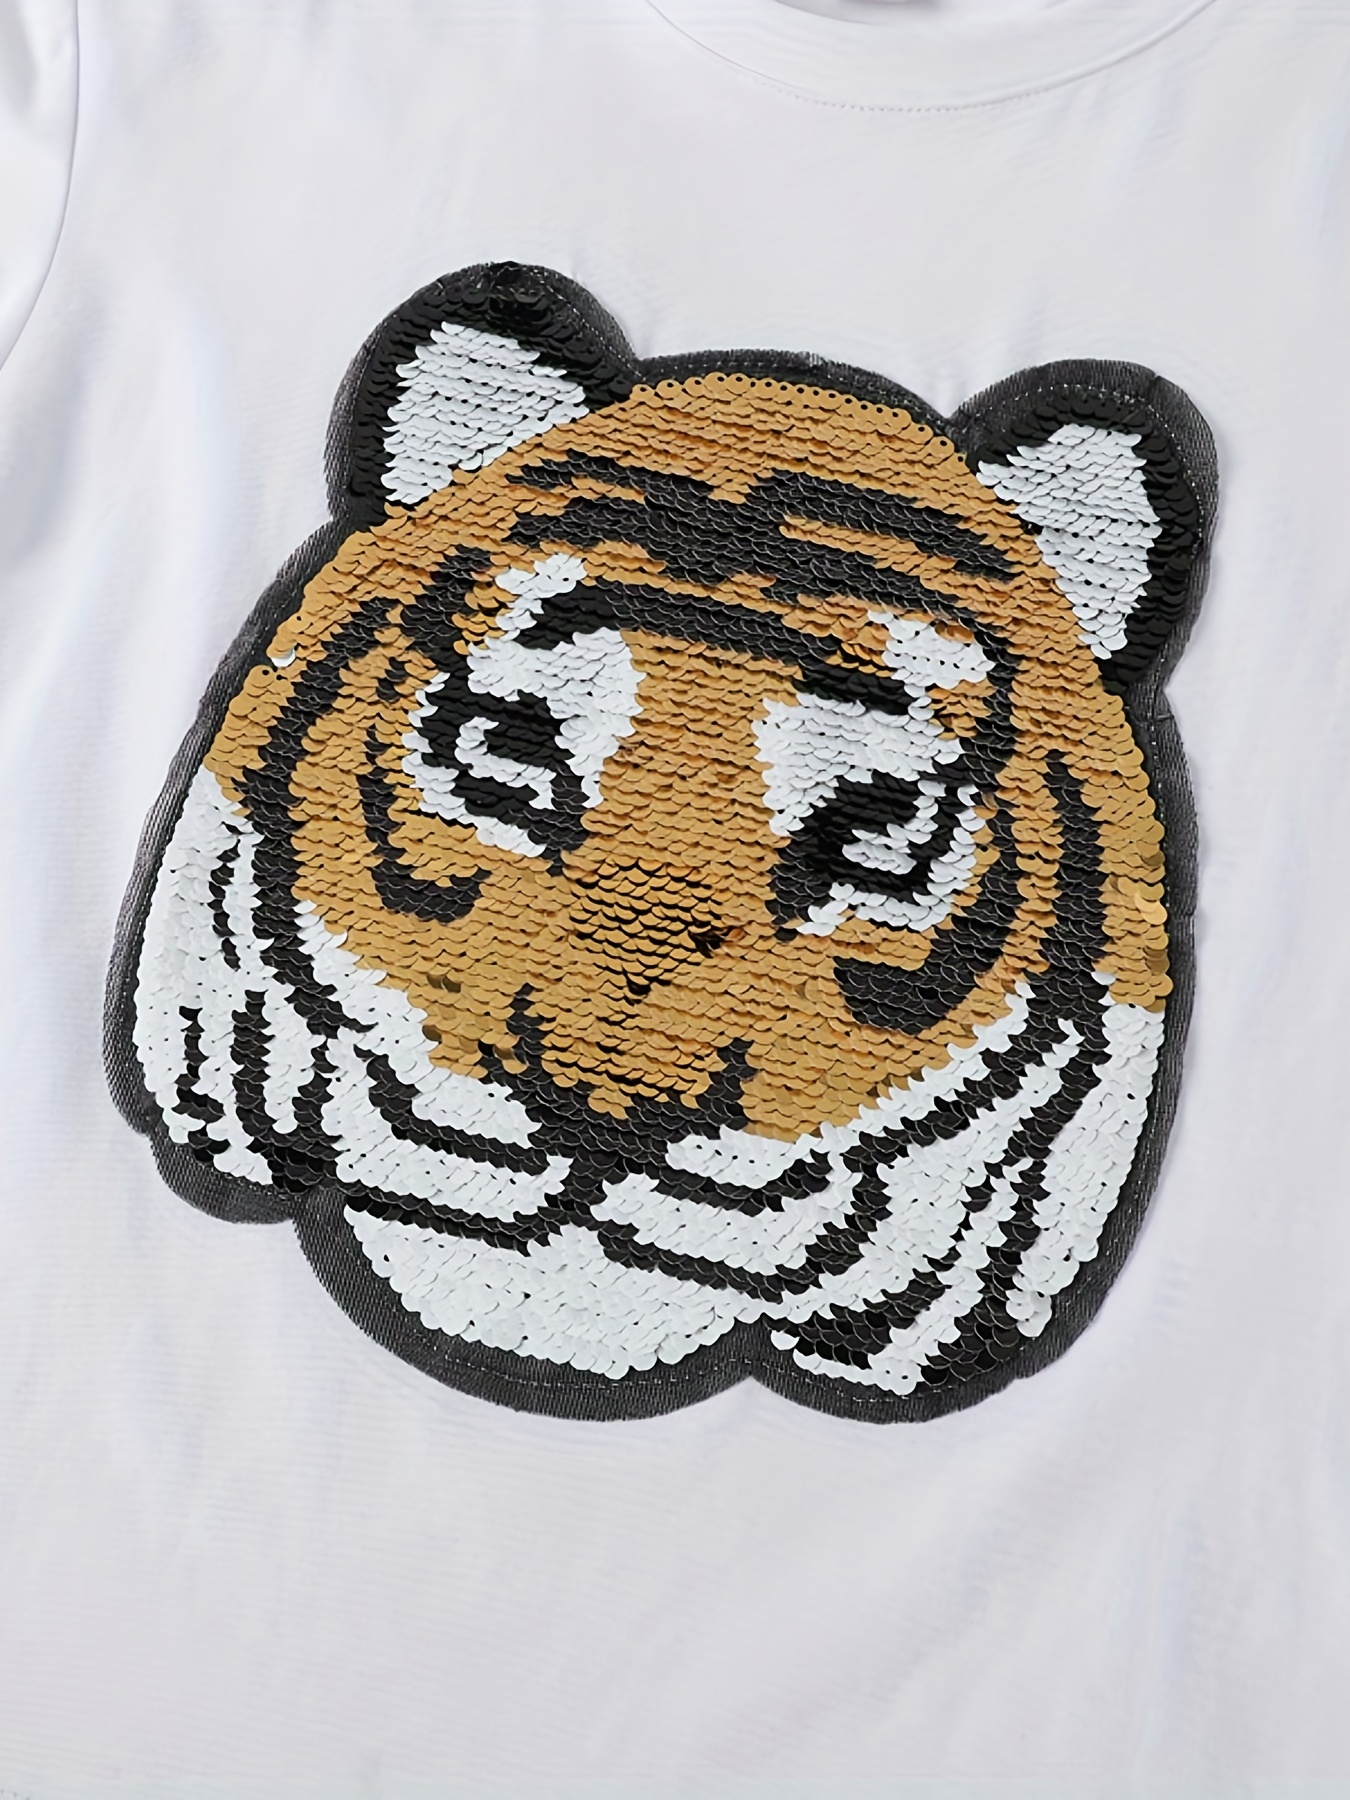 White Sequin Tiger T-Shirt - kids atelier